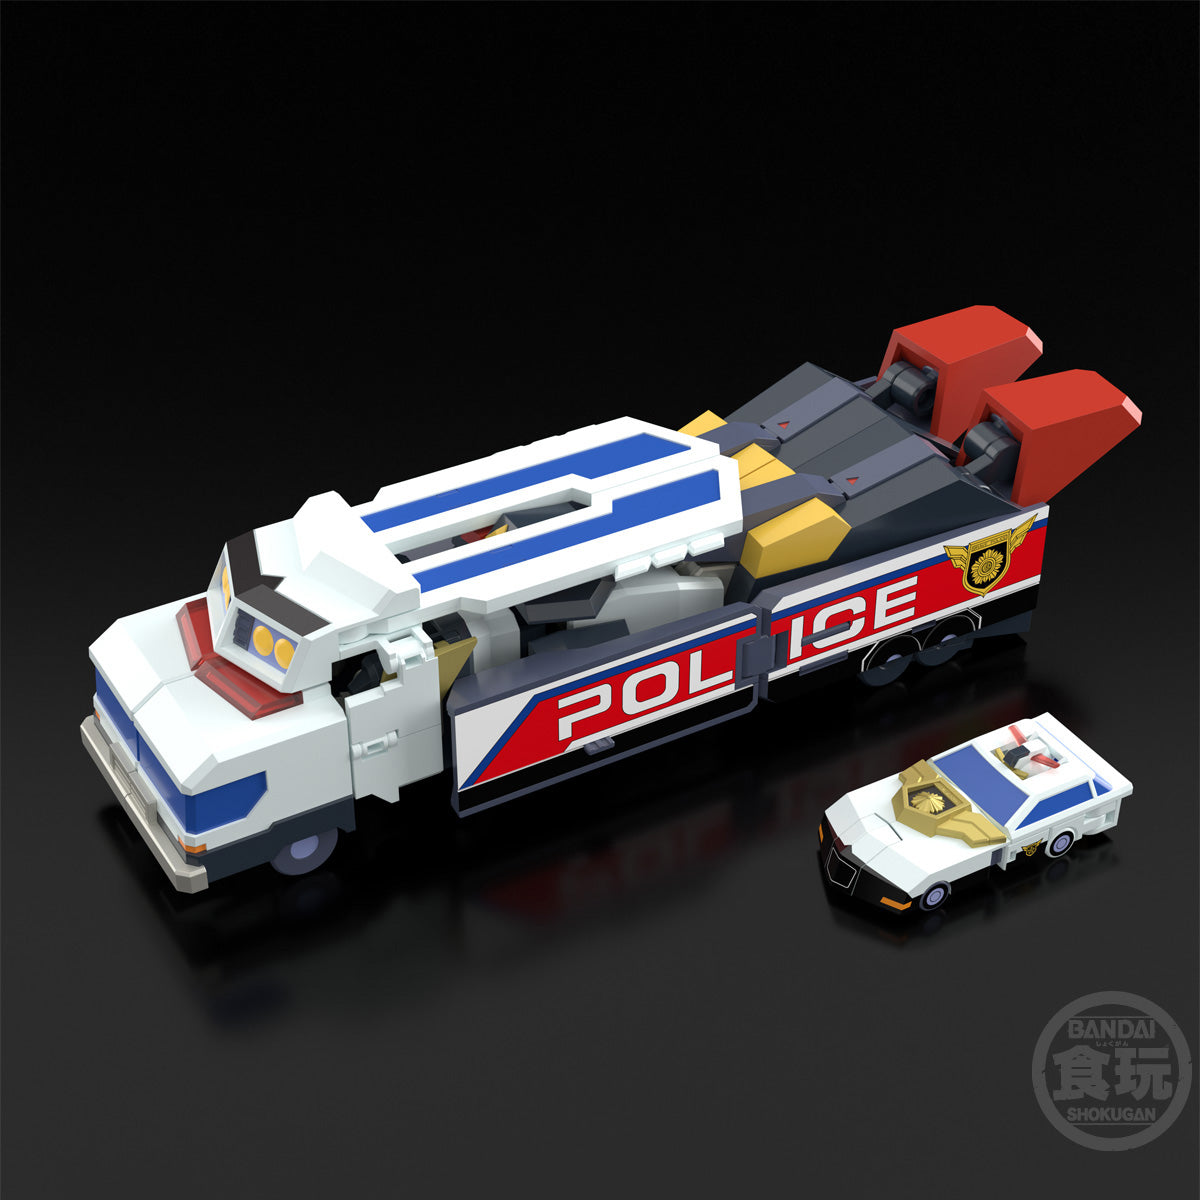 Bandai - Shokugan - SMP - The Brave Police J-Decker - J-Decker Model Kit - Marvelous Toys